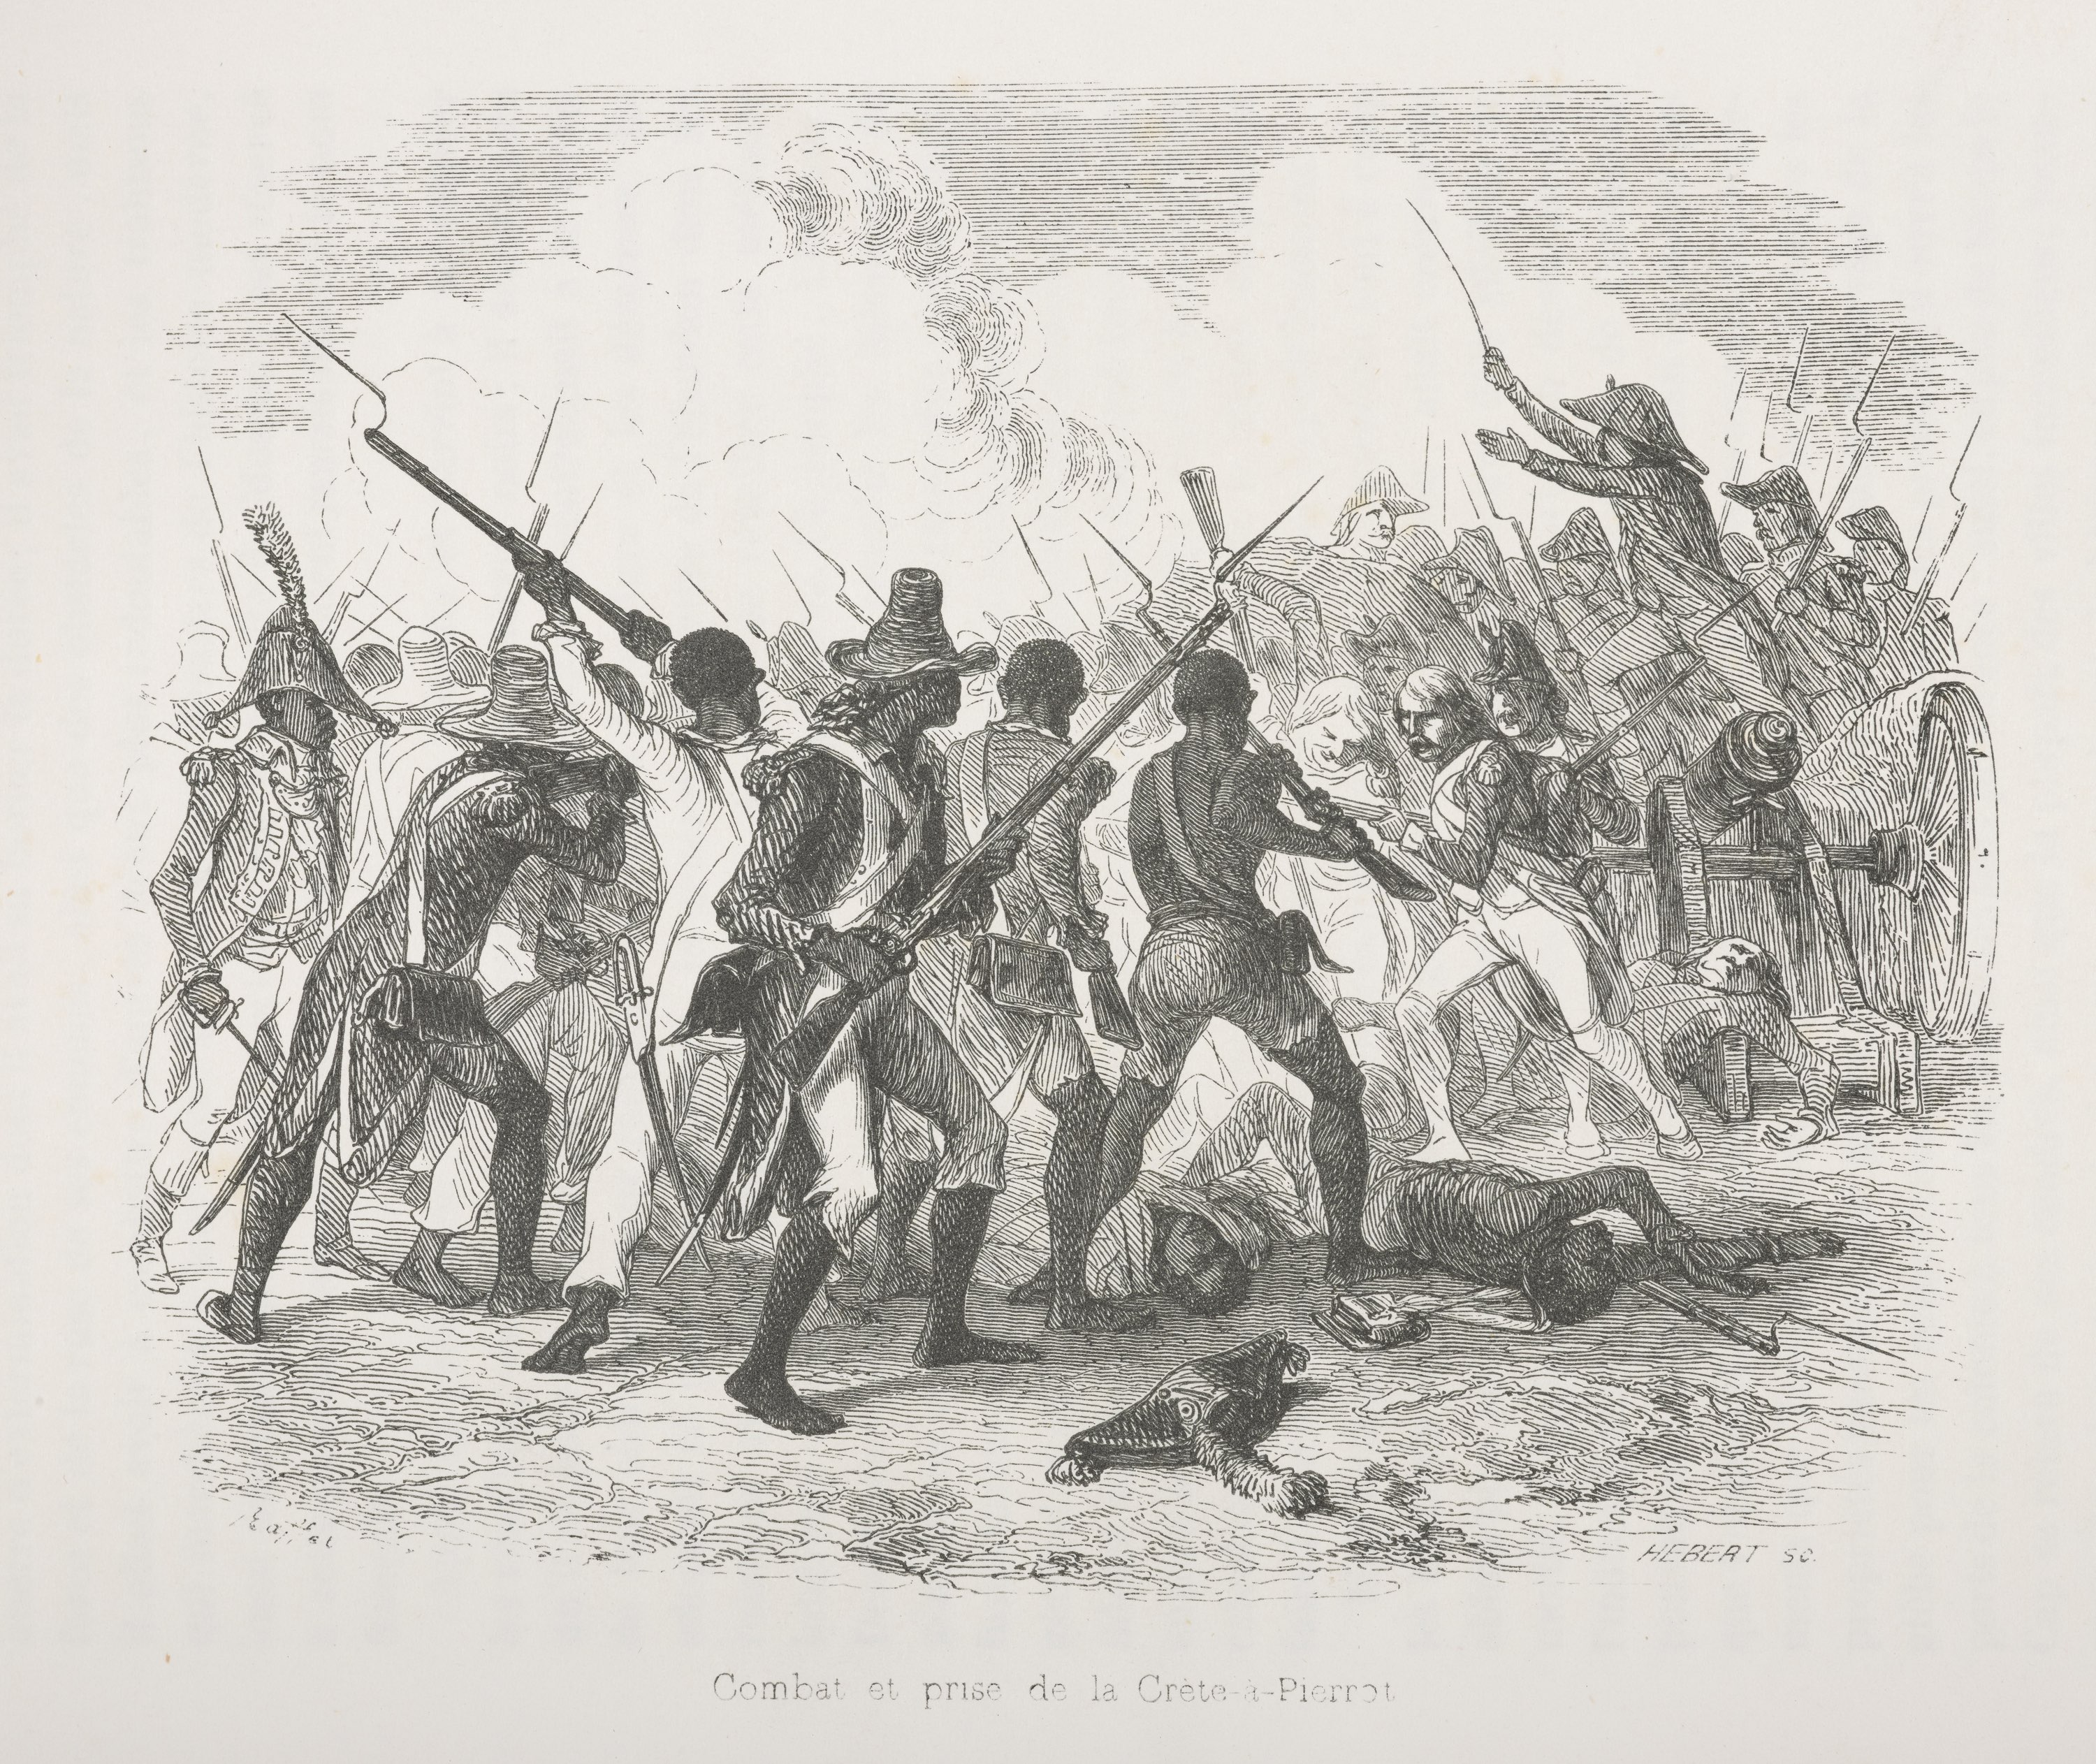 napoleon haitian revolution